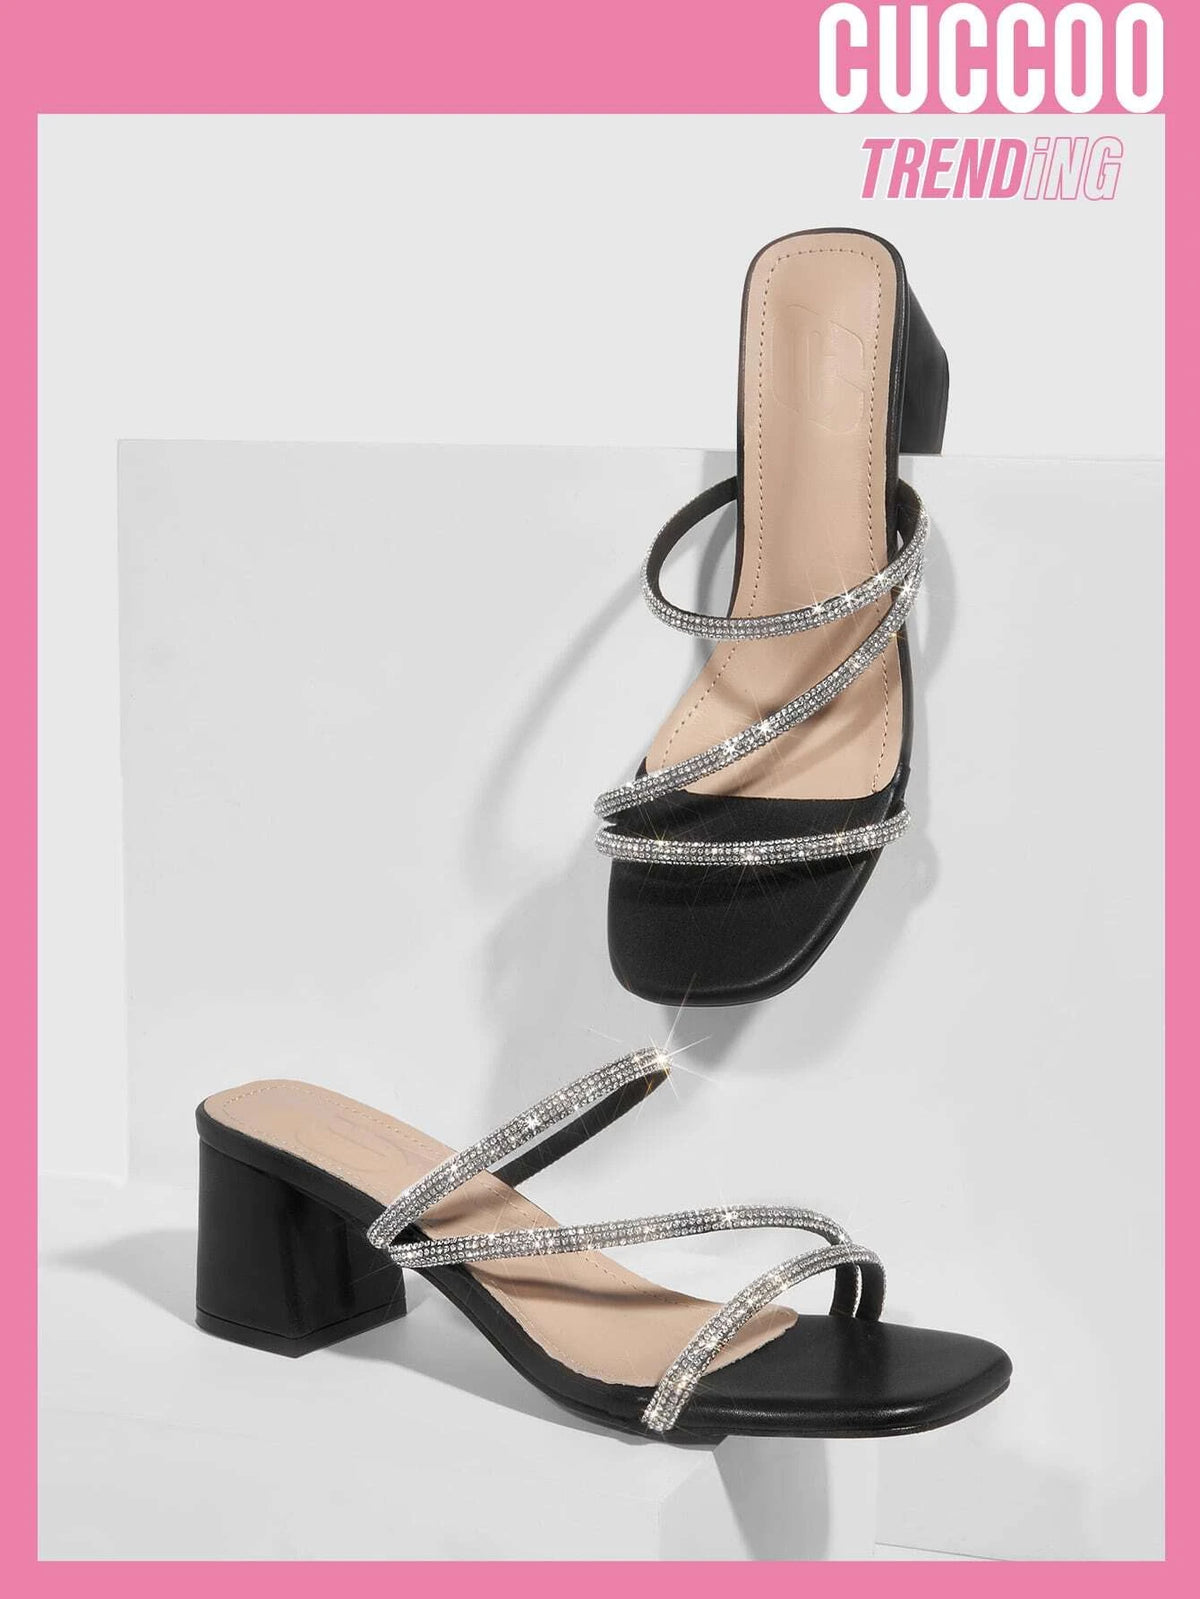 CUCCOO Trending Women Rhinestone Decor Chunky Heeled Sandals, Glamorous Outdoor Mule Sandals